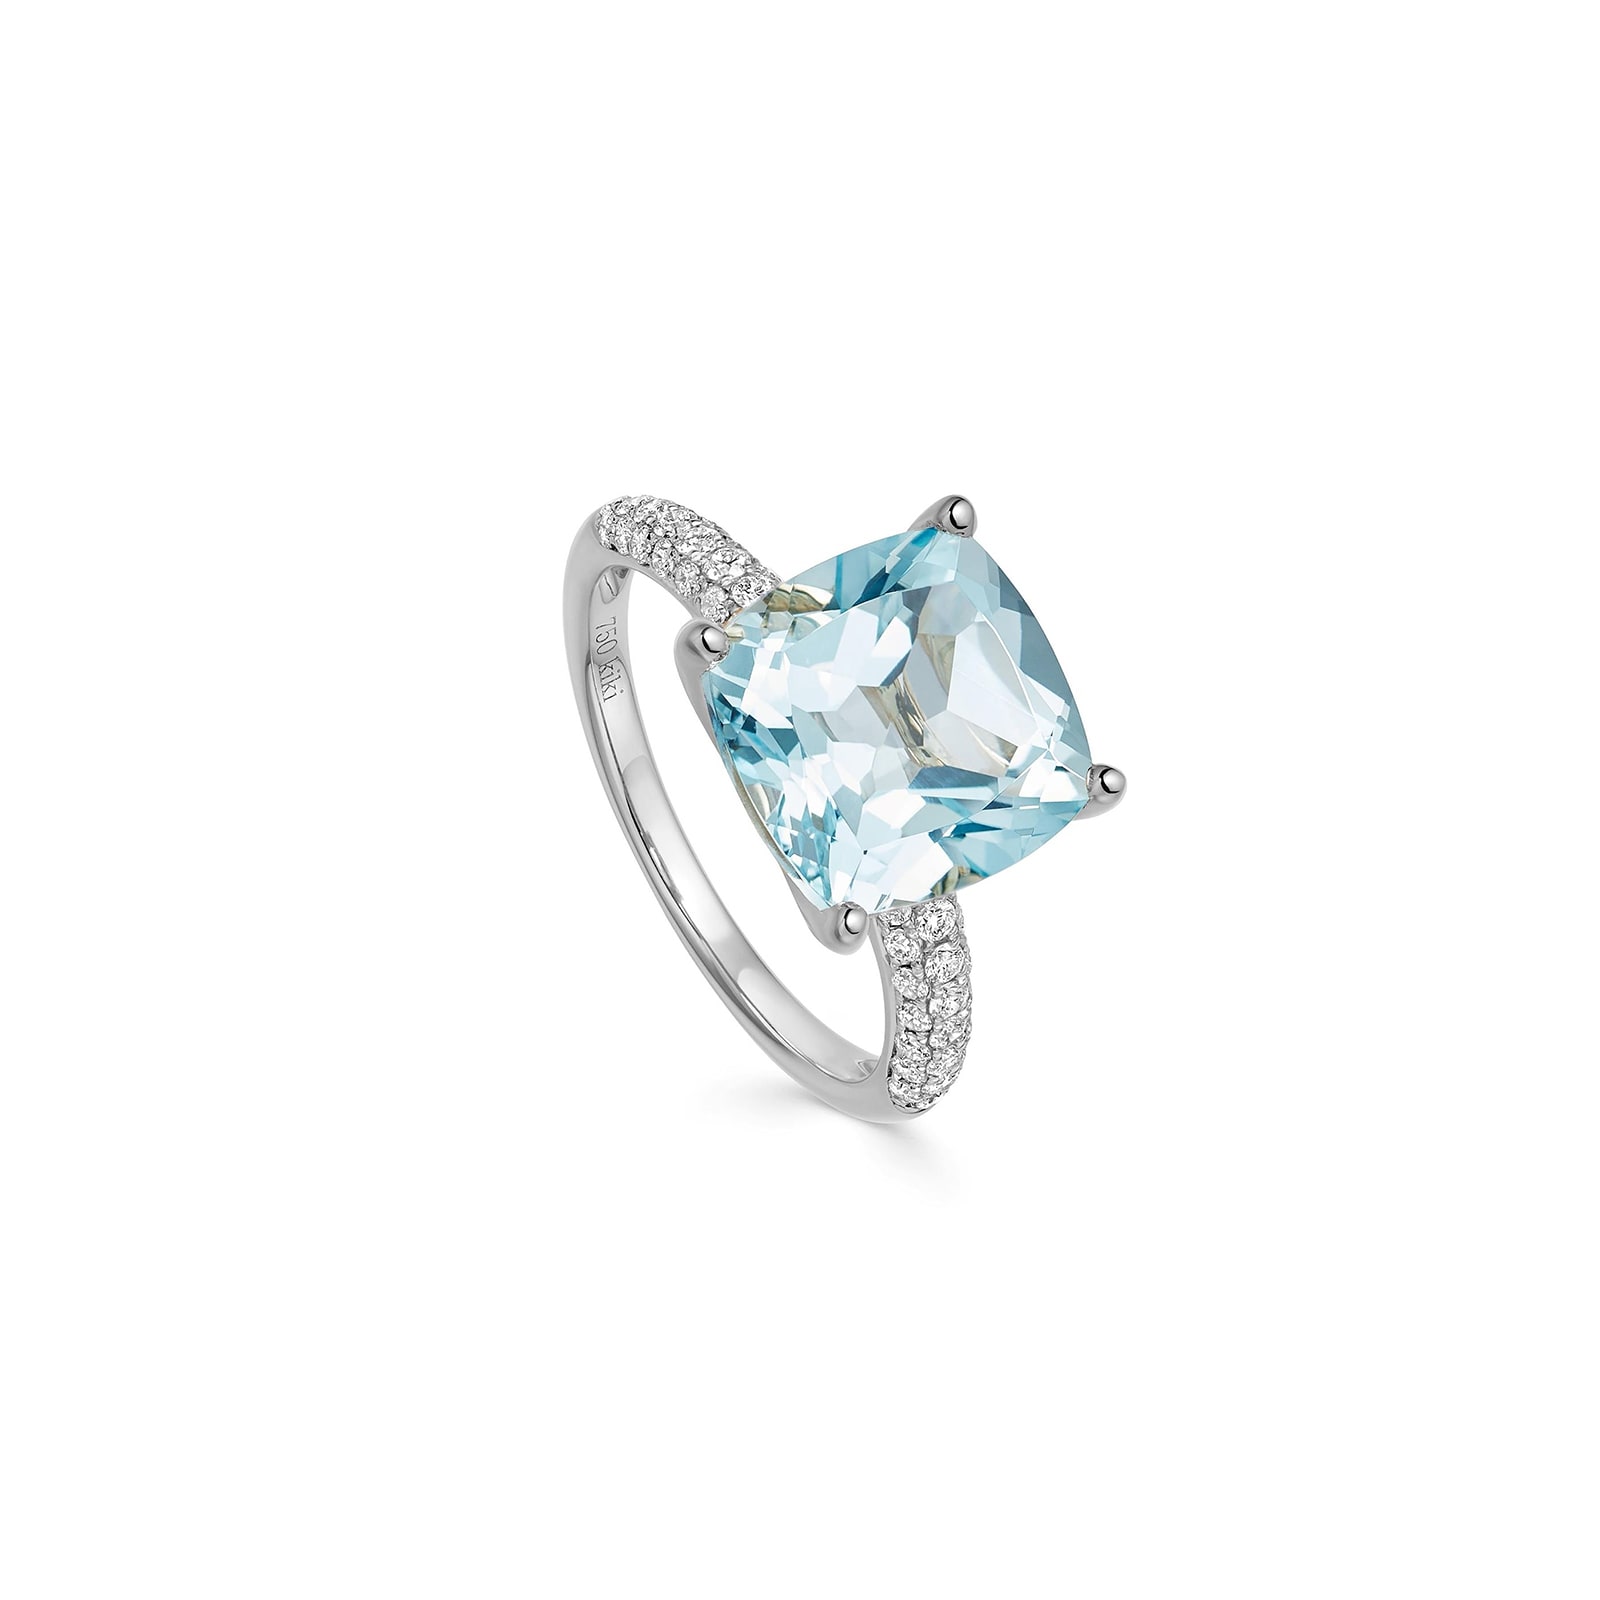 Kiki Cushion 18ct White Gold Diamond & Blue Topaz Ring - Ring Size O